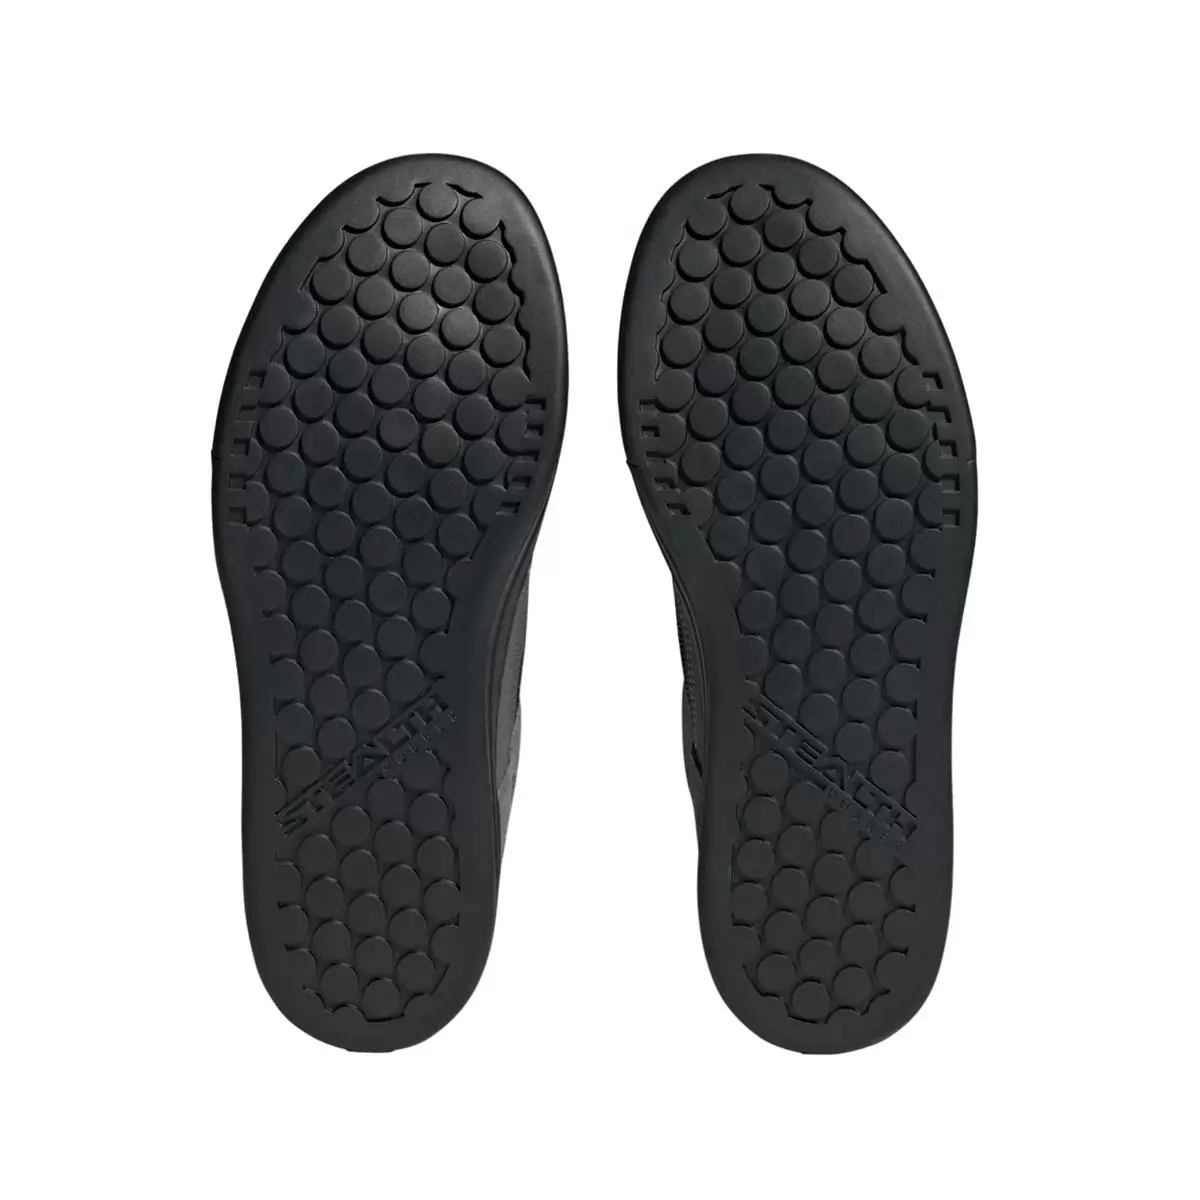 MTB Shoes Flat Freerider Gray Size 40 #2